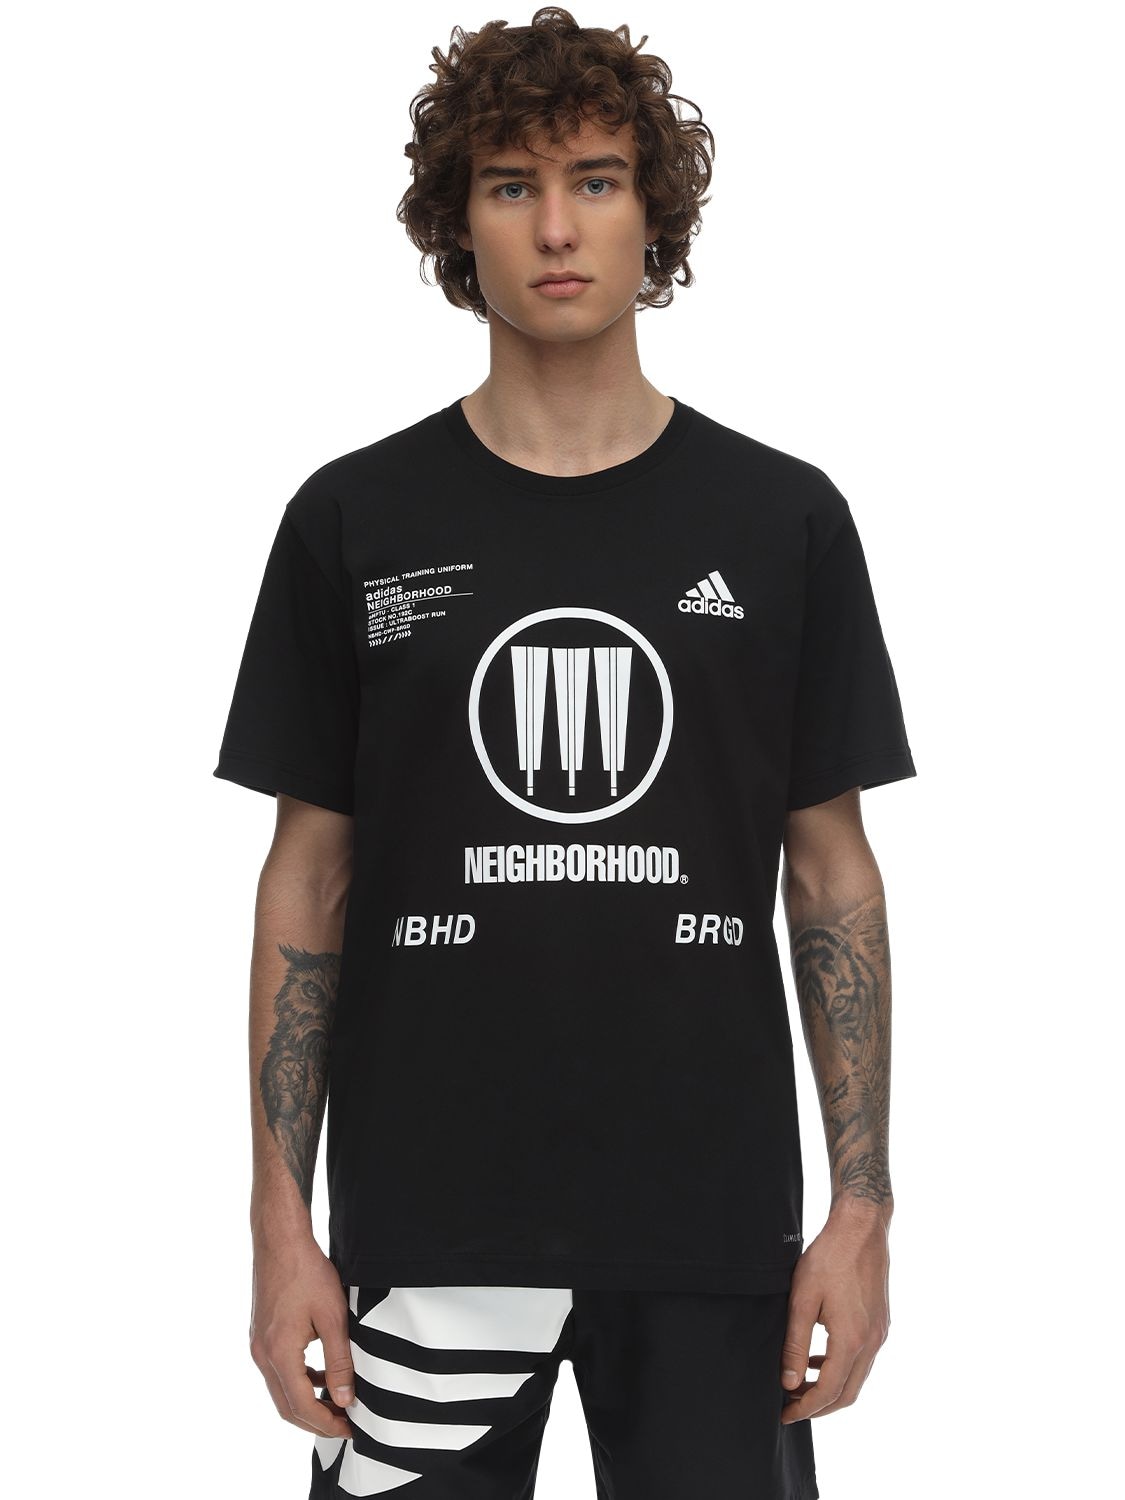 Adidas Originals Statement Nbhd T-shirt In Black